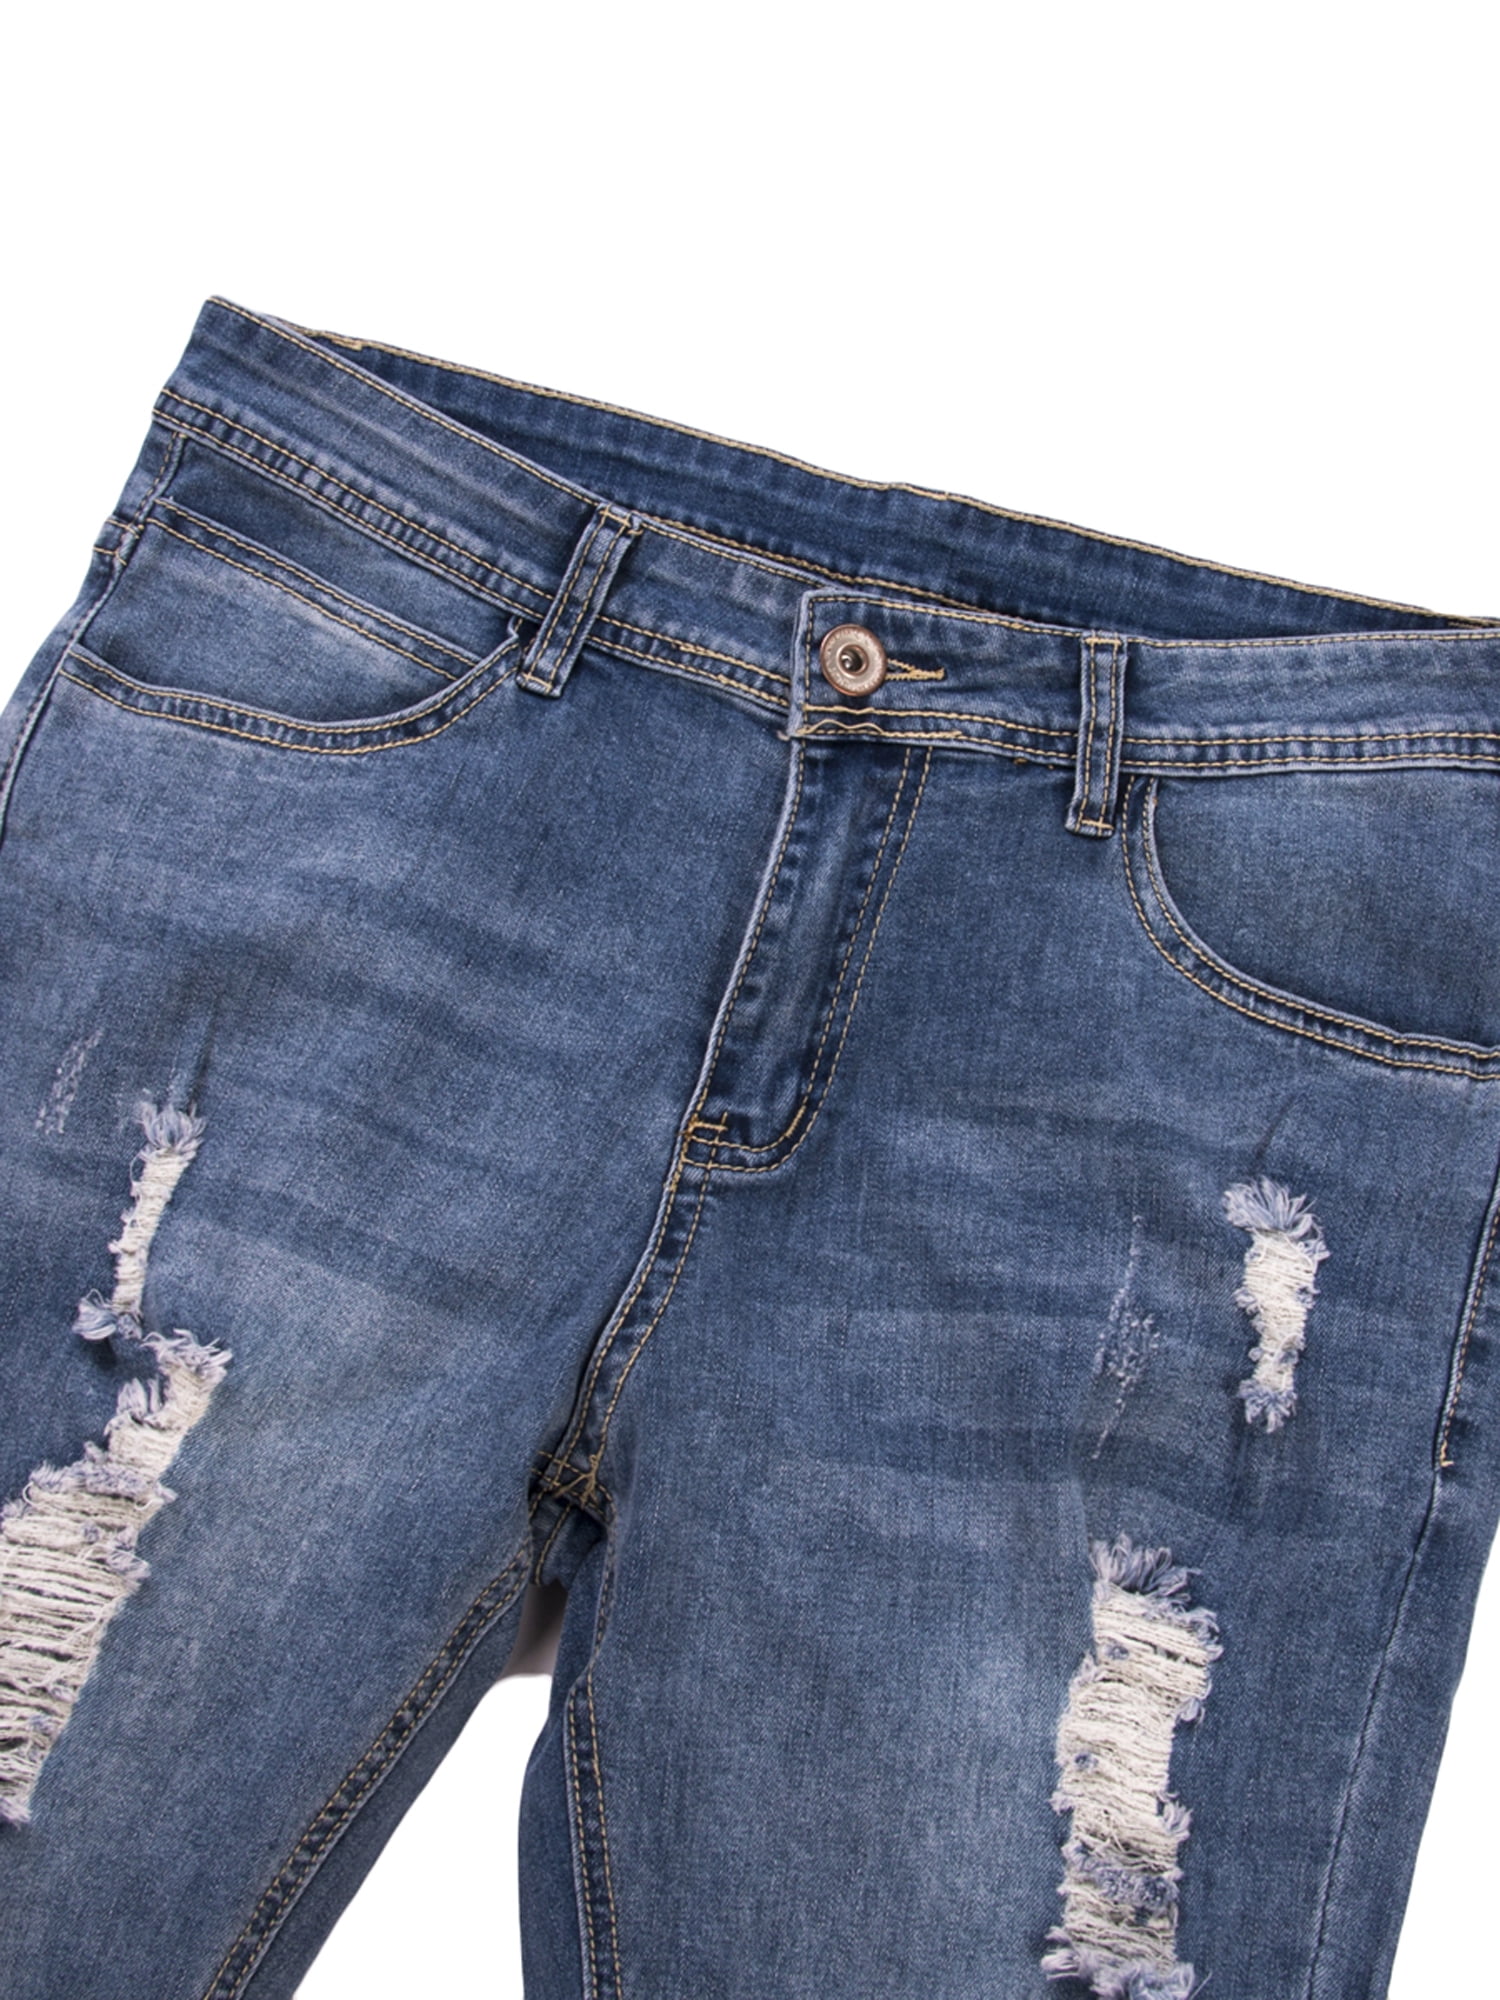 TFFR Men Ripped Hole Jeans, Middle Waist Distressed Destroyed Slim Fit  Stretch Pencil Denim Pants Hip Hop Streetwear 